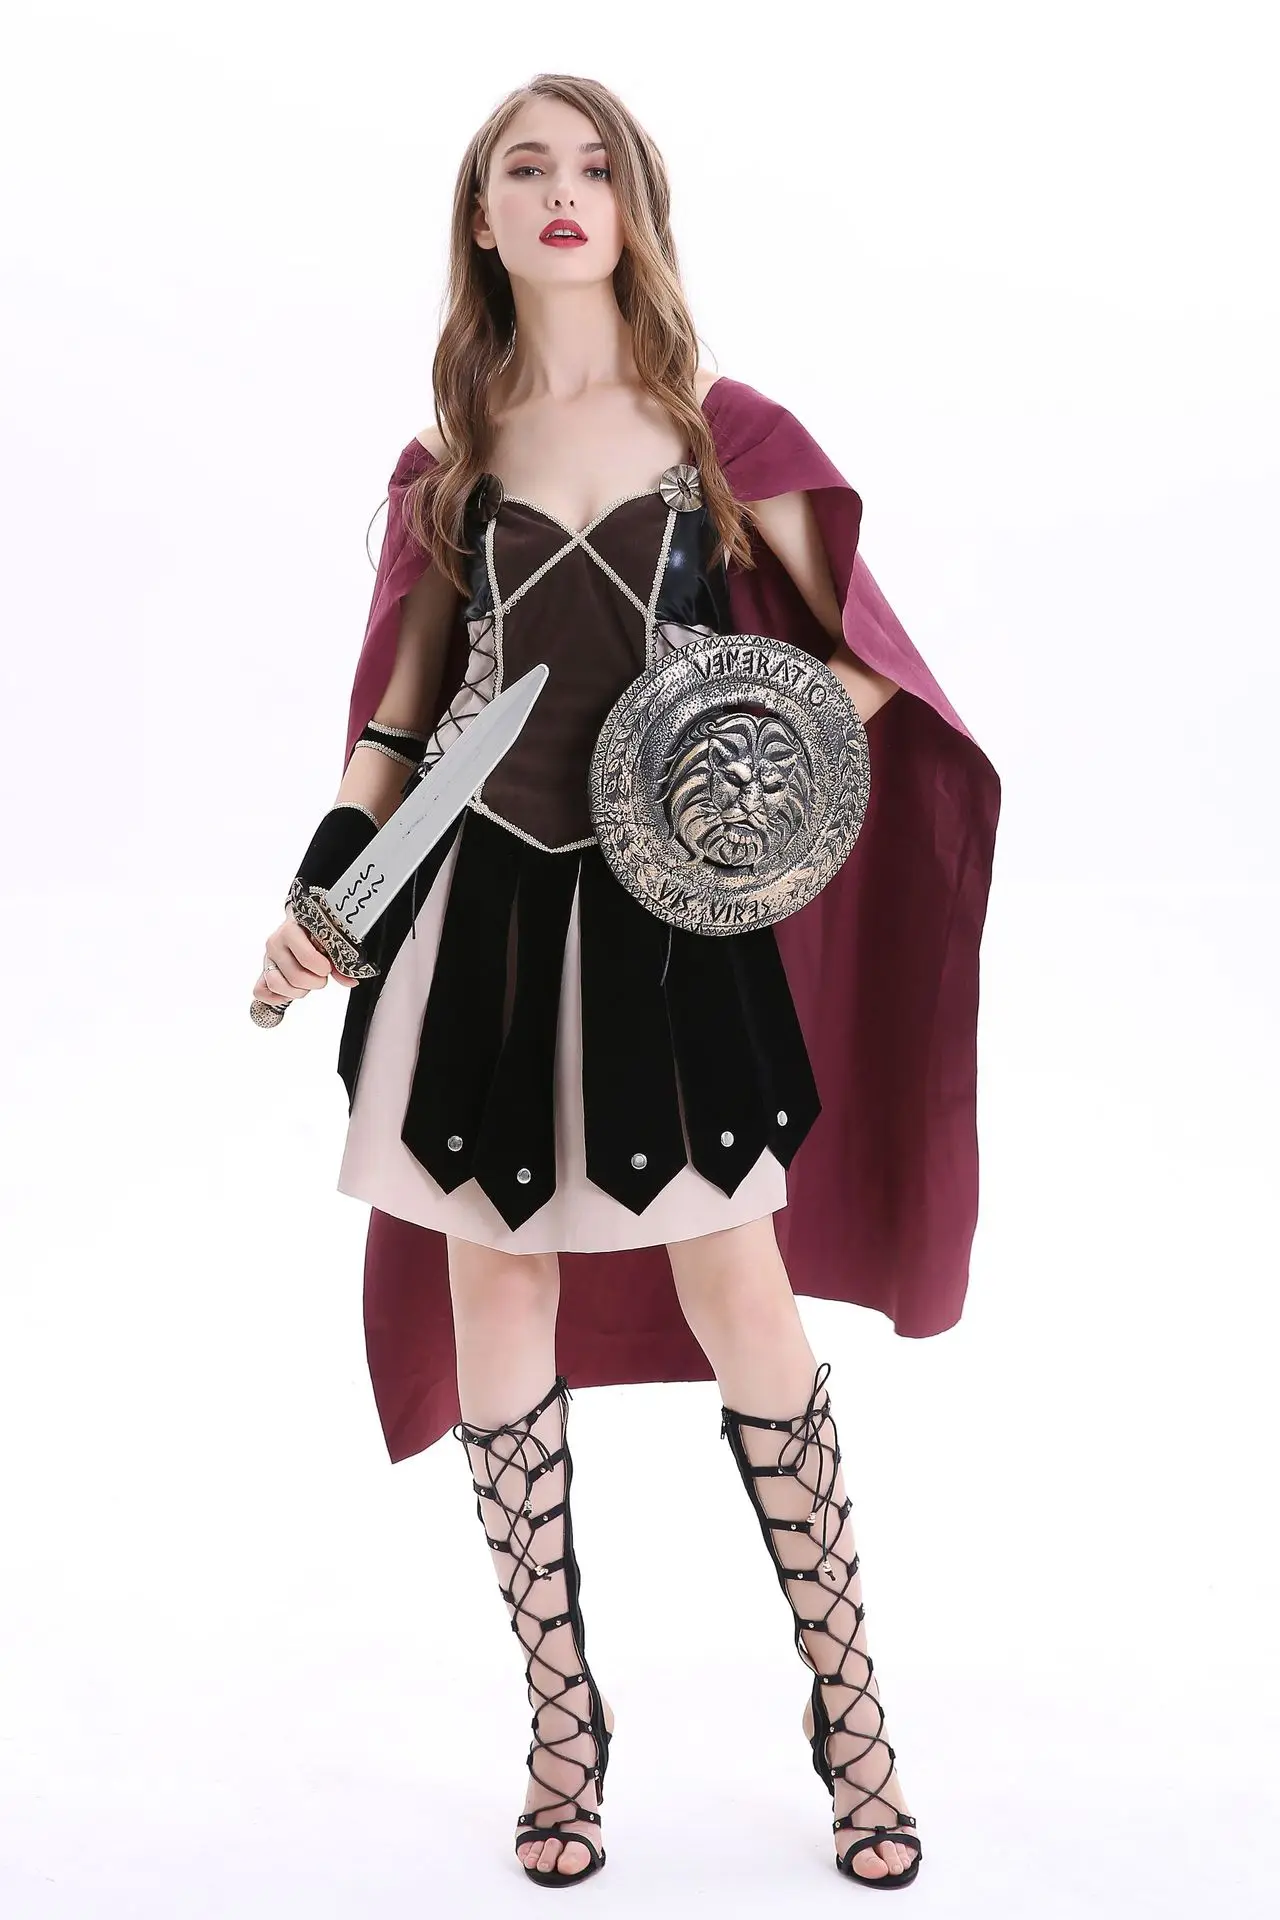 Halloween costume Vikings pirate costume women medieval Dress COS costume Roman warrior Grand Theft Auto character female